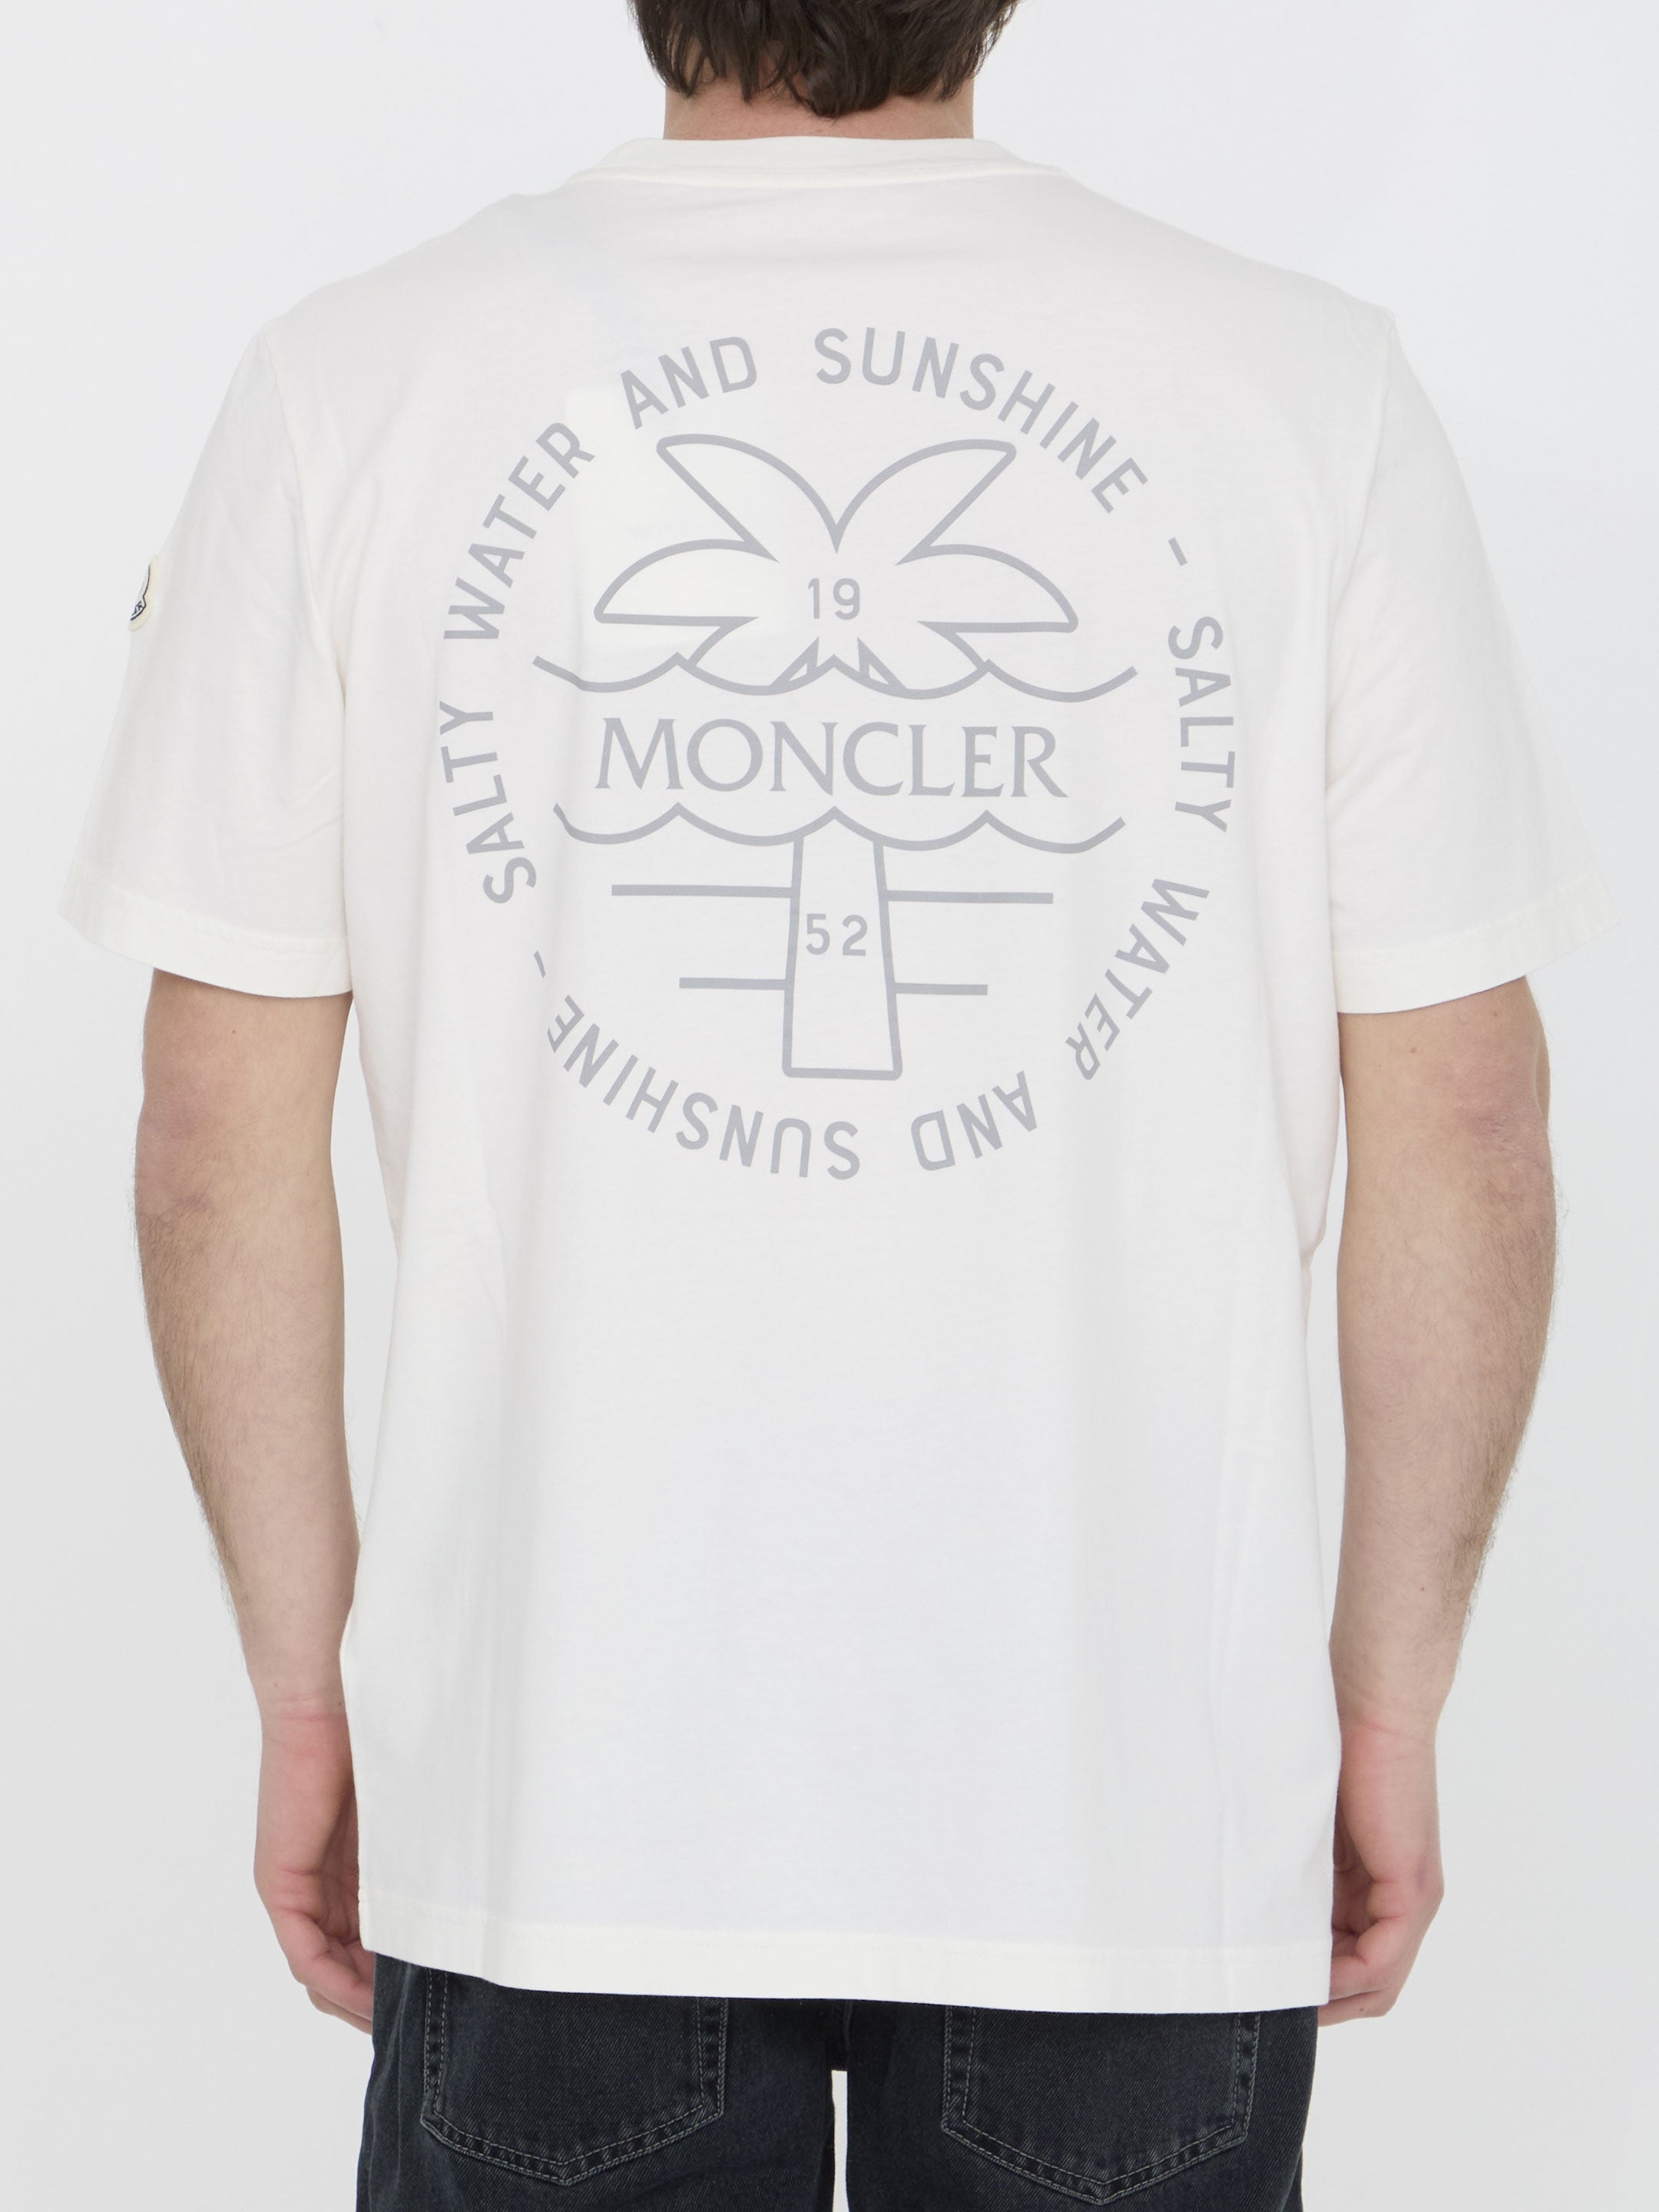 MONCLER-OUTLET-SALE-Cotton-t-shirt-Shirts-L-WHITE-ARCHIVE-COLLECTION-4.jpg